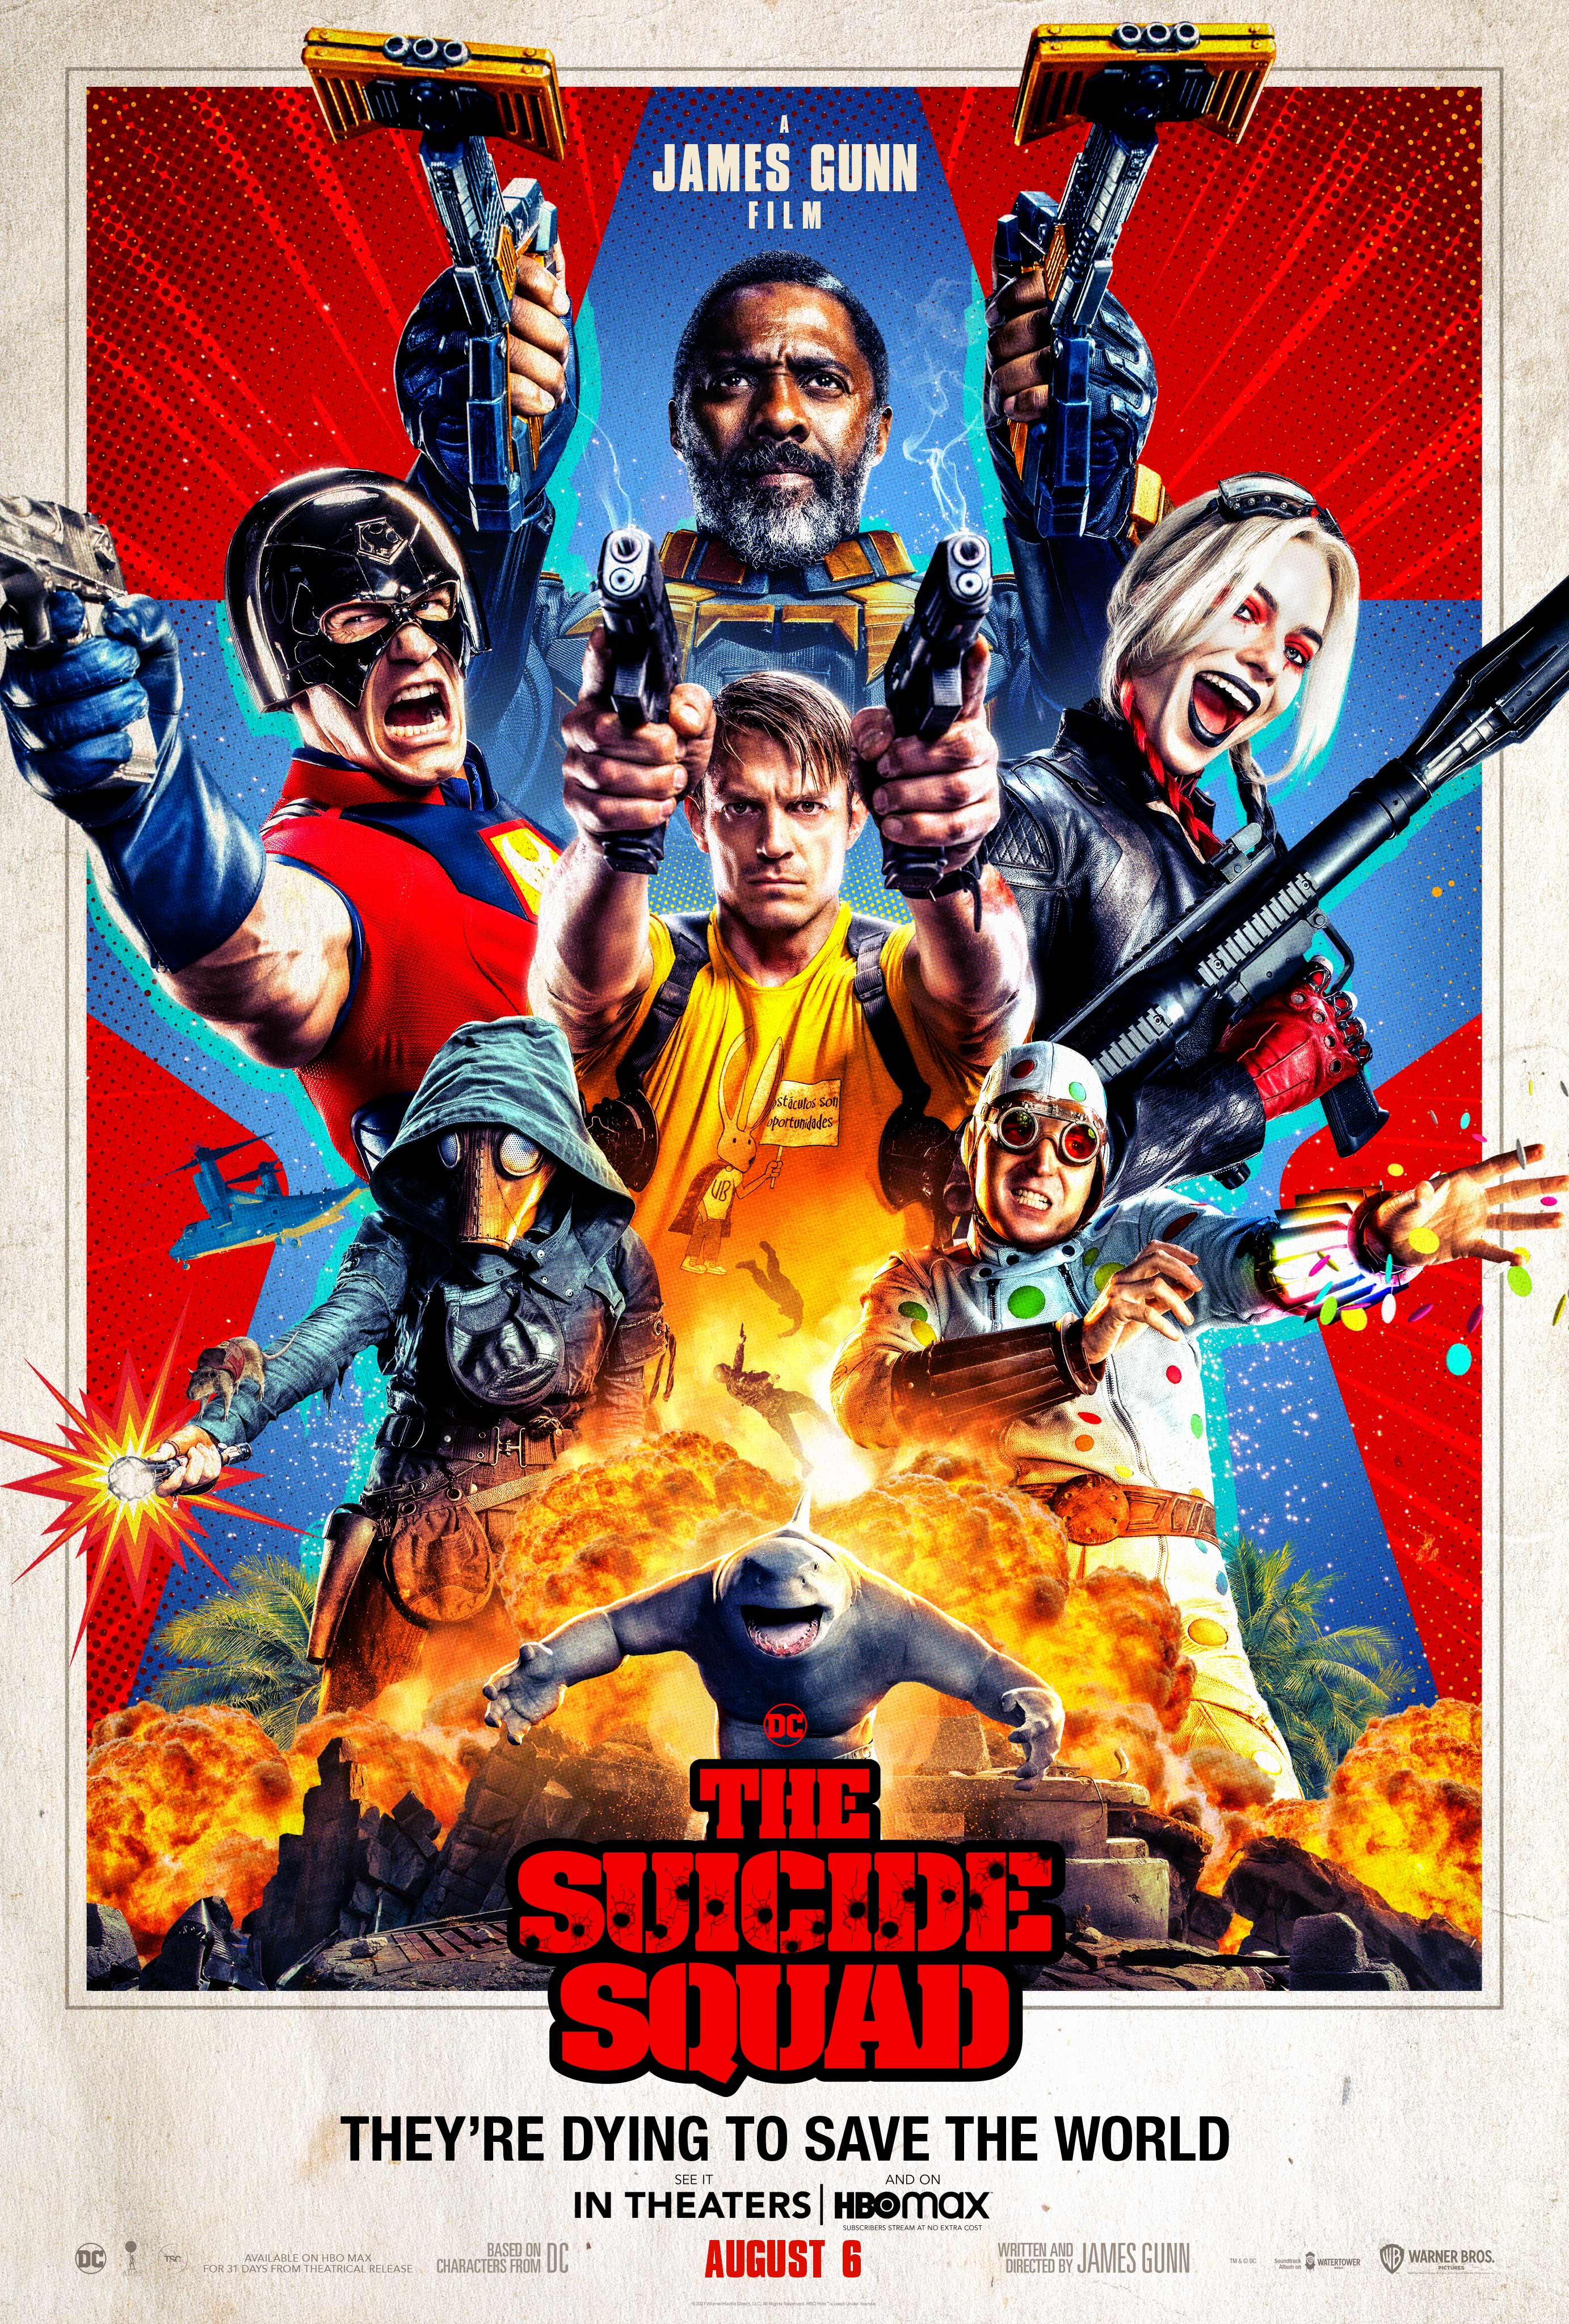 New trailer for “The Suicide Squad” reveals more of the villain Starro –  cine